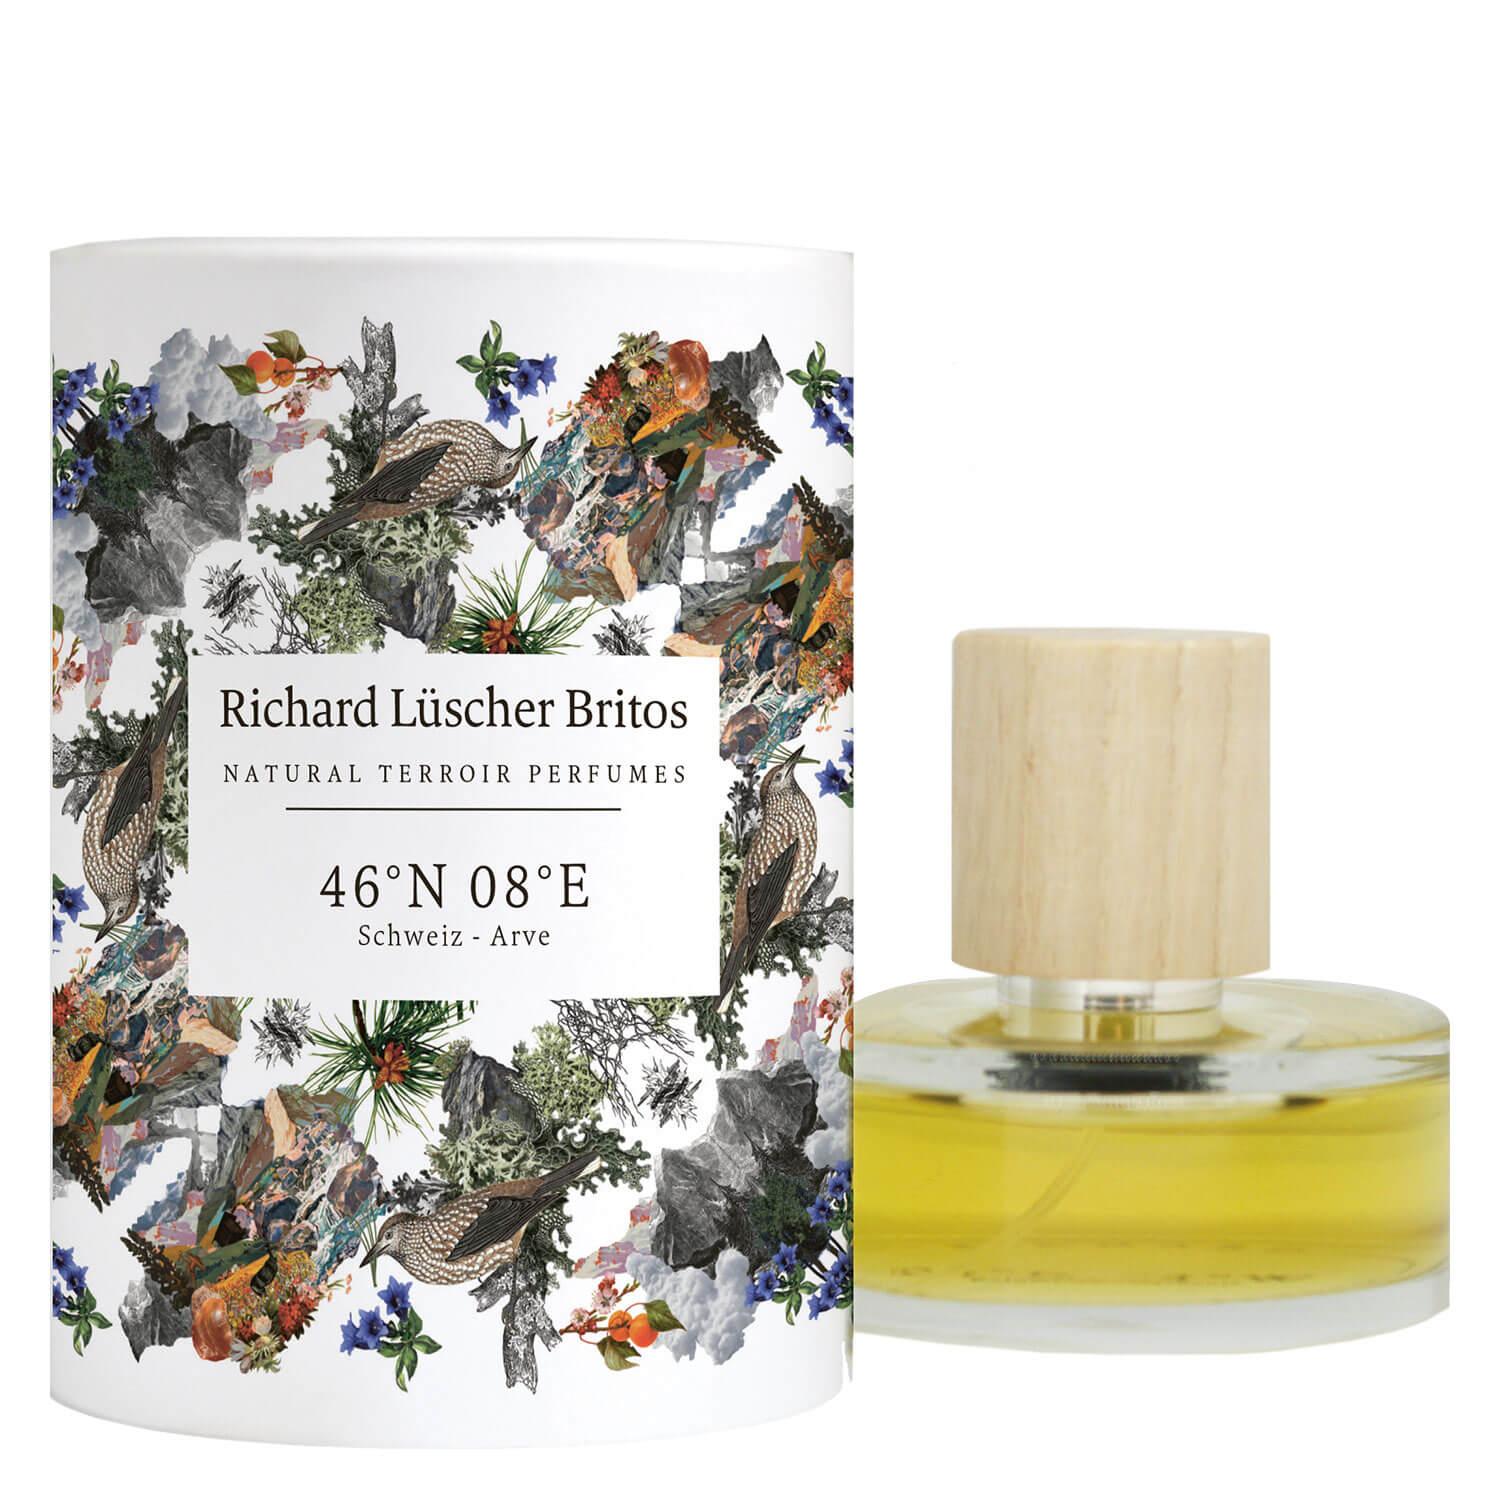 Farfalla Fragrance - 46°N 08°E Switzerland Arolle Natural Terroir Parfum